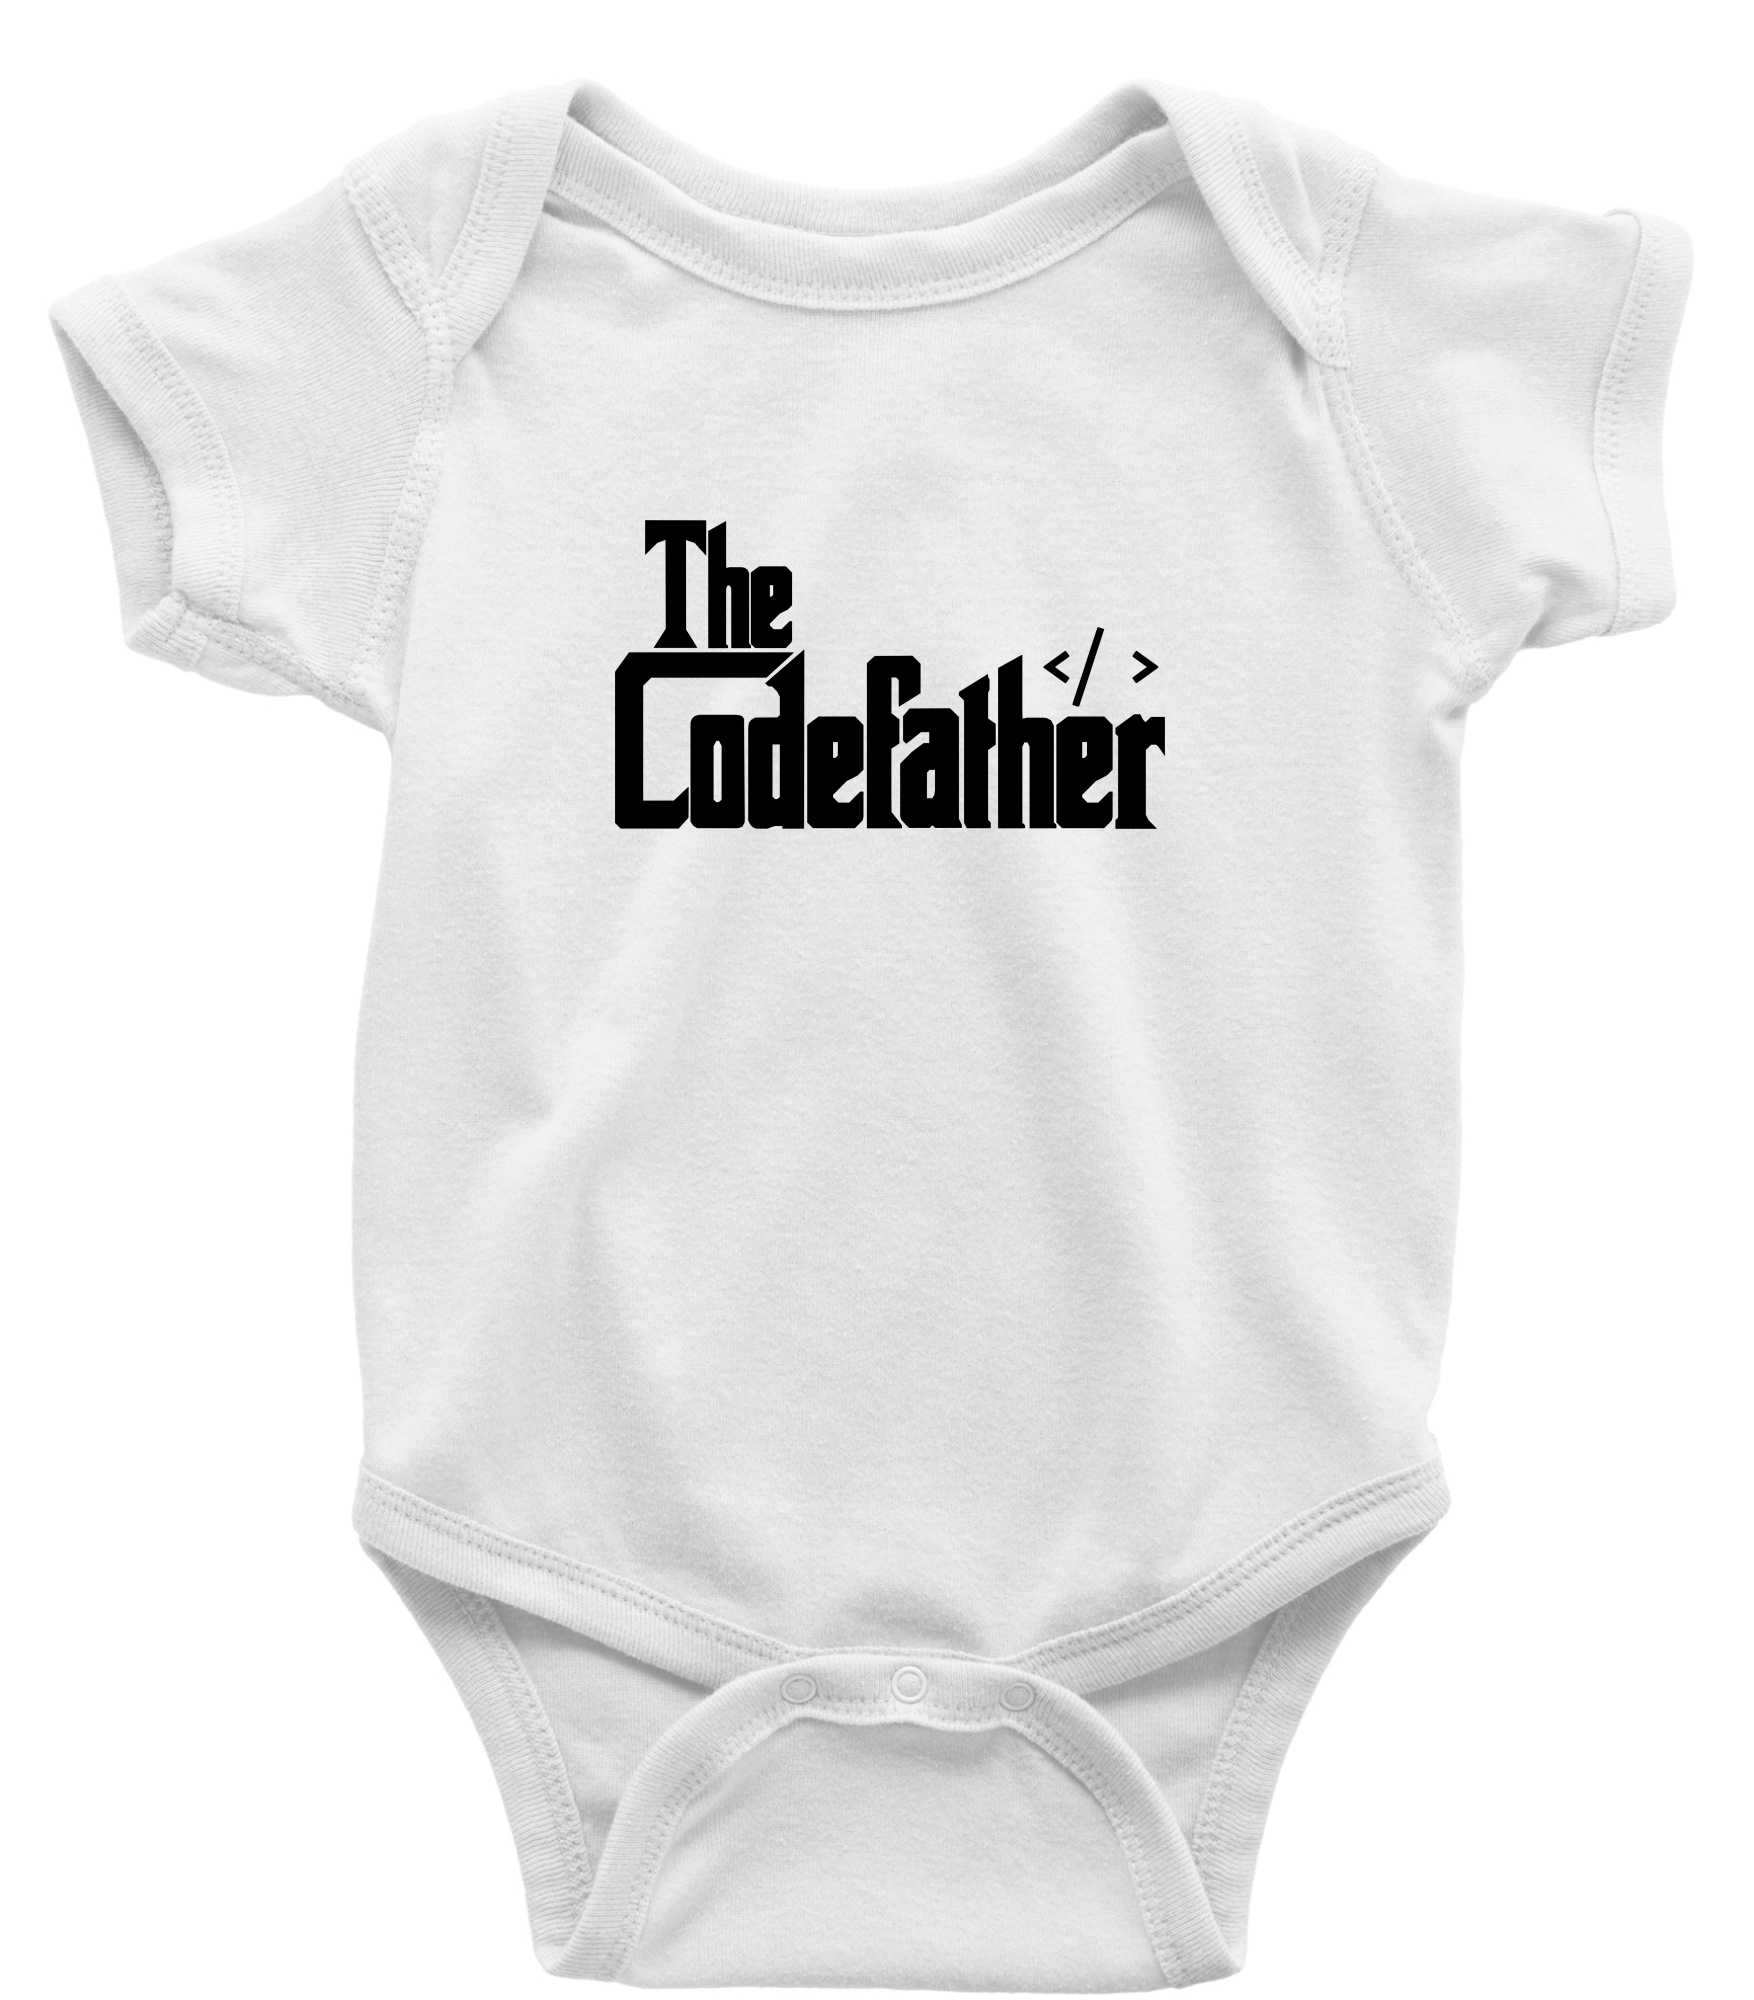 The codefather - Body kojenecké